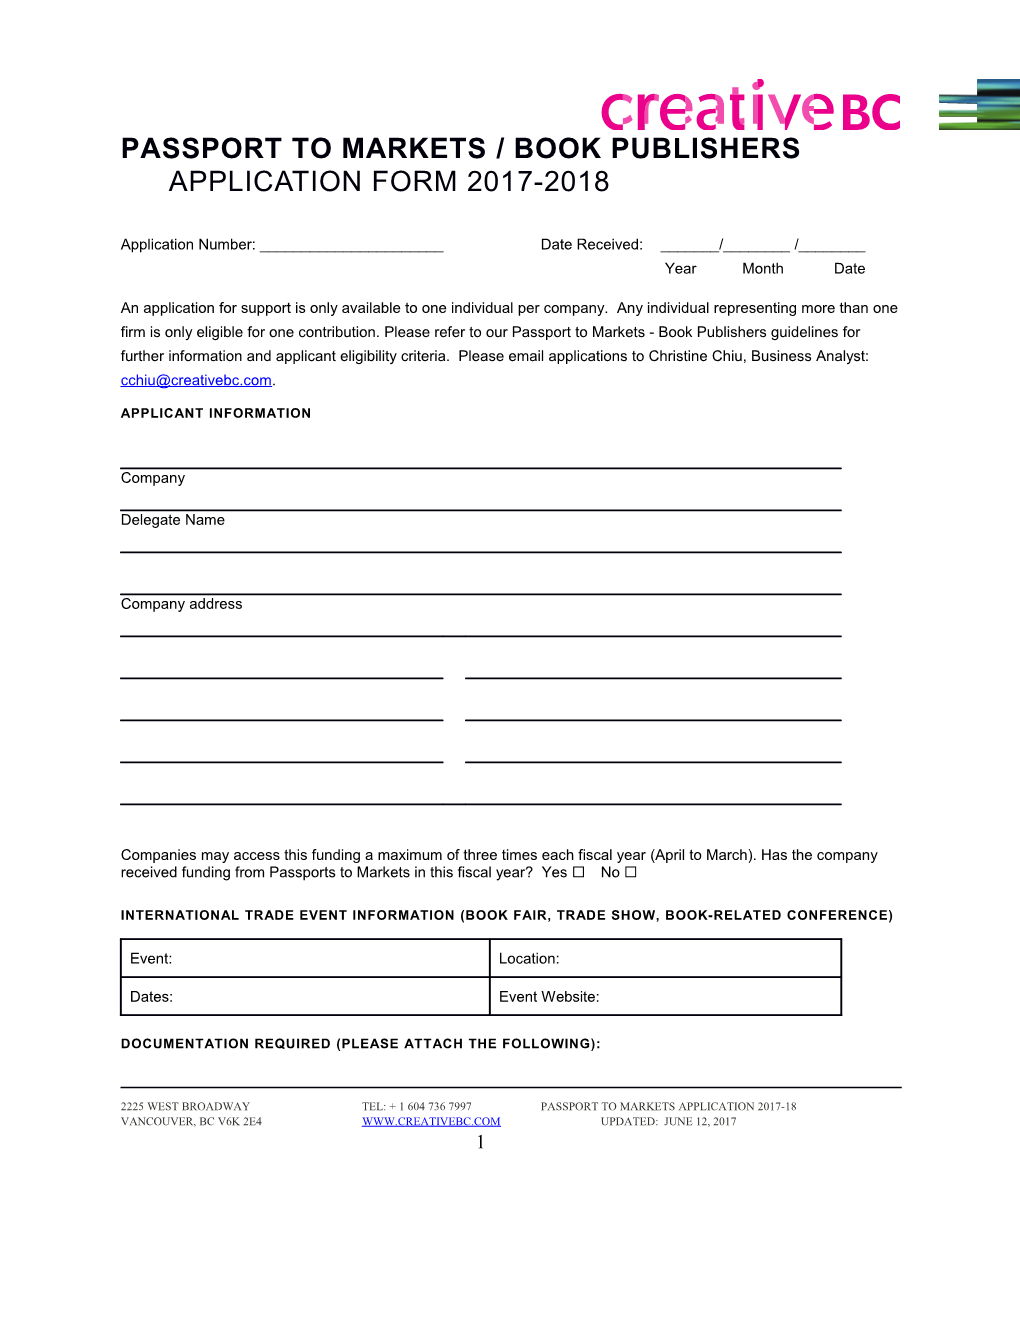 Passport to Markets / Book Publishersapplication Form 2017-2018